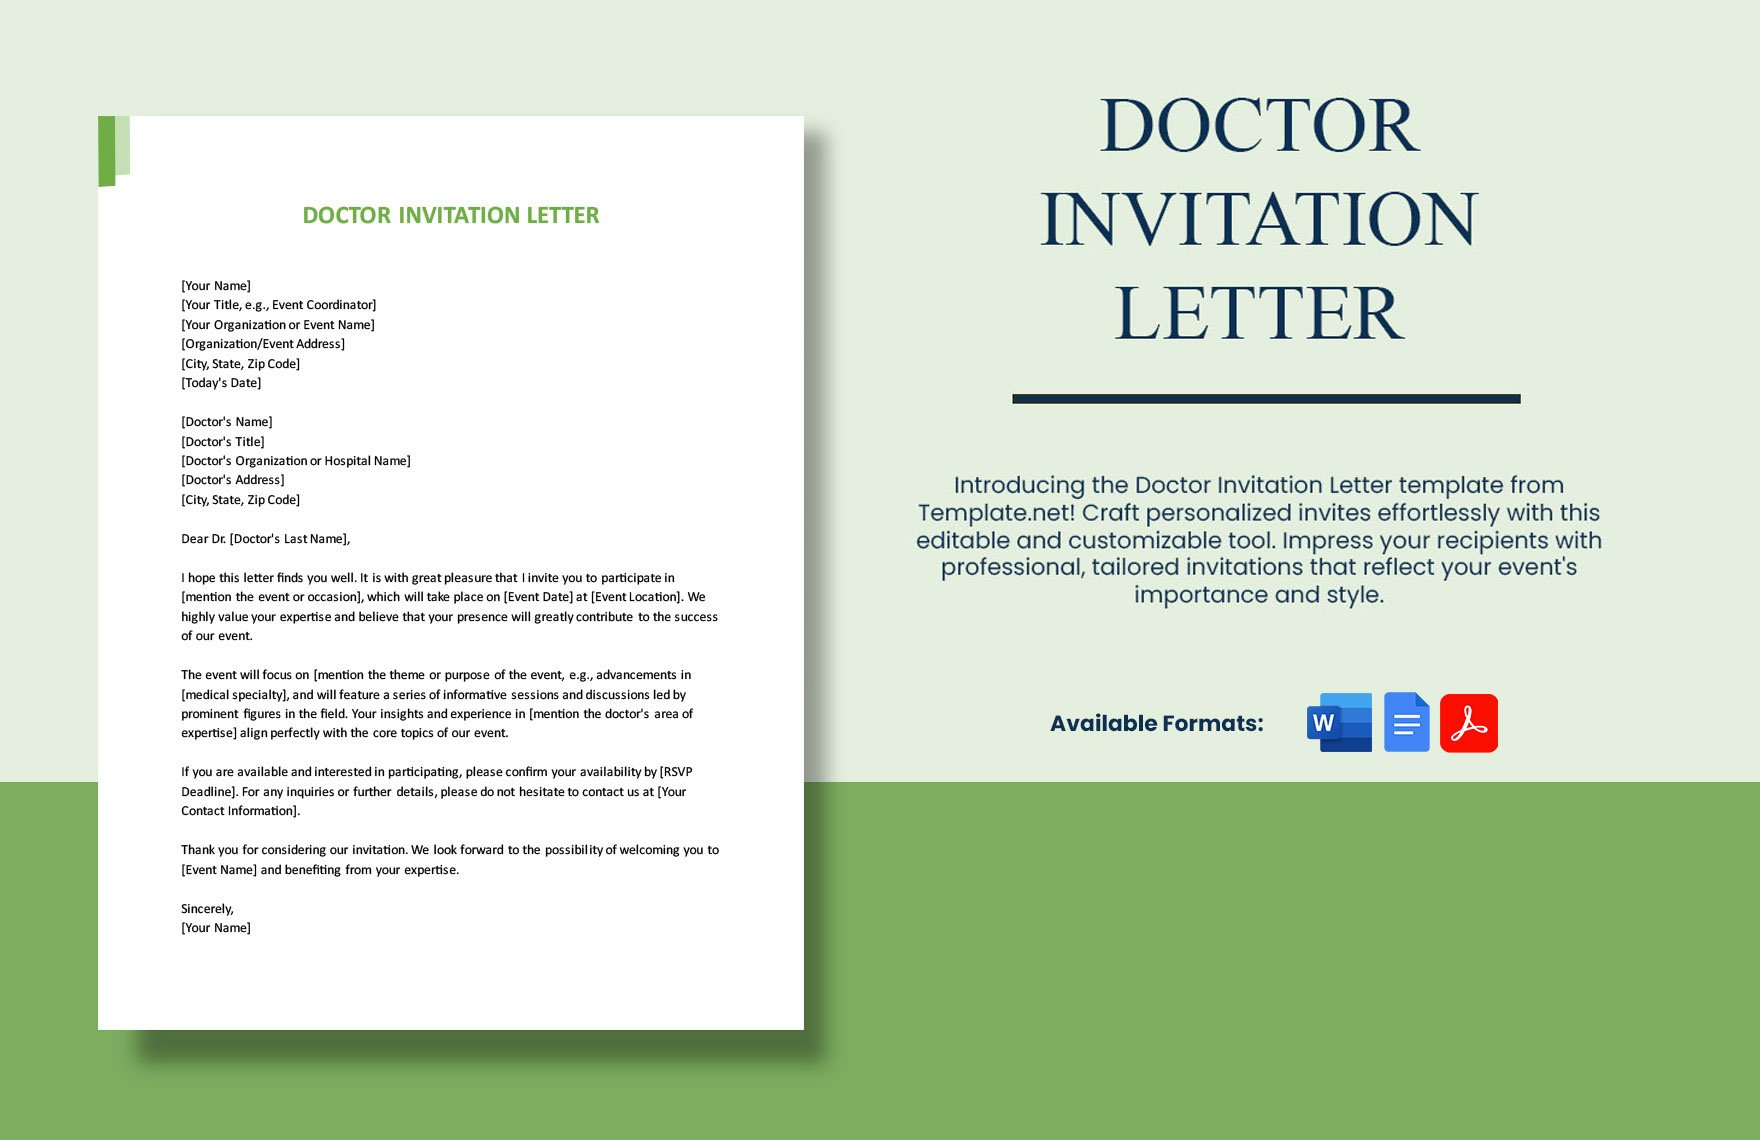 Doctor Invitation Letter in Word, Google Docs, PDF